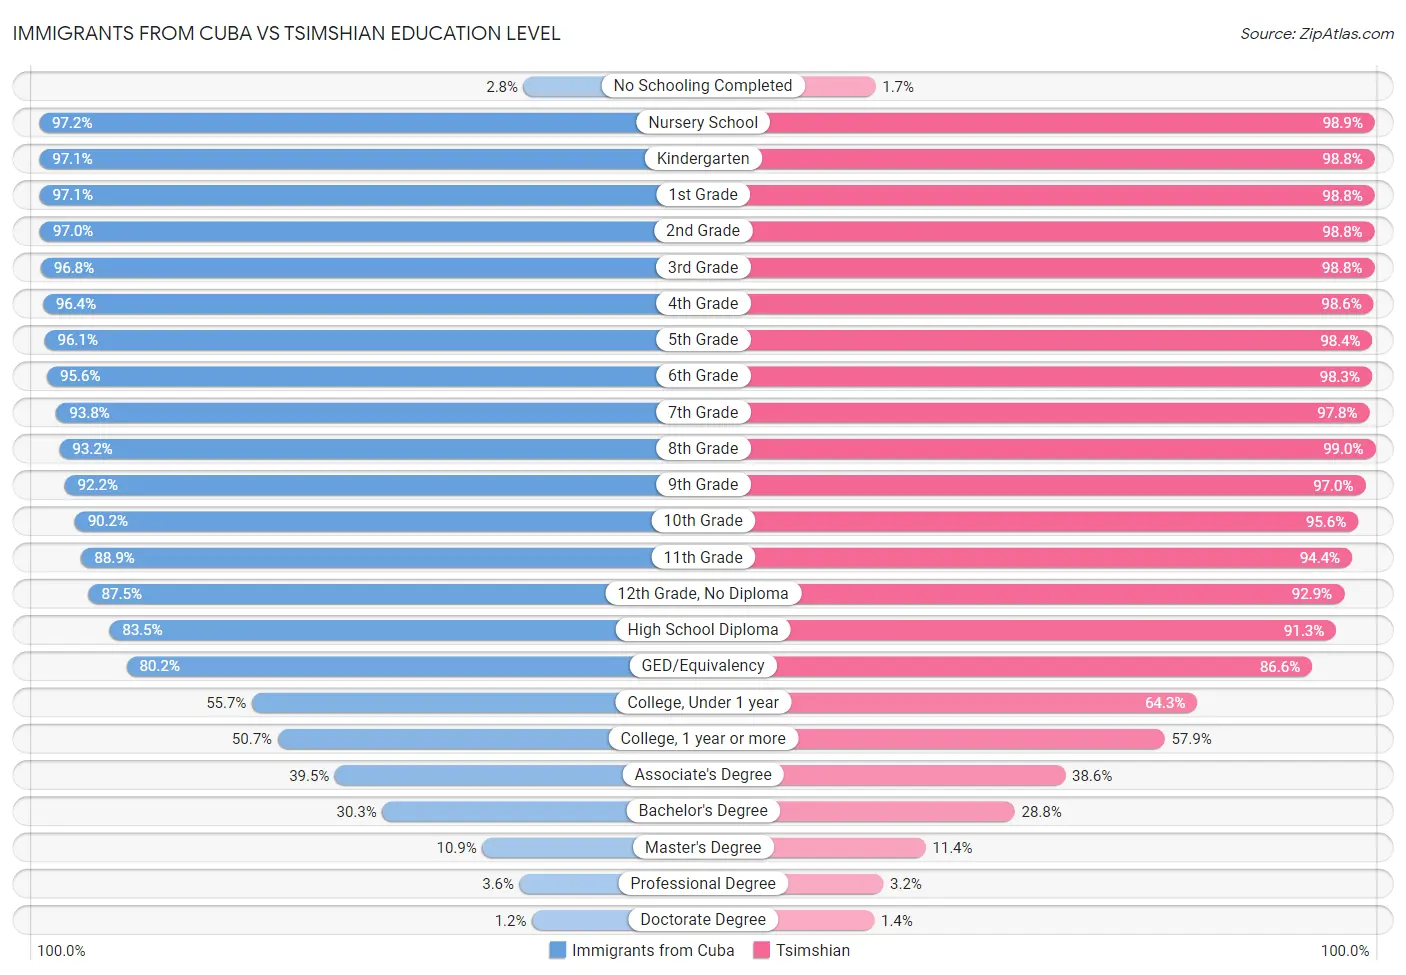 Immigrants from Cuba vs Tsimshian Education Level